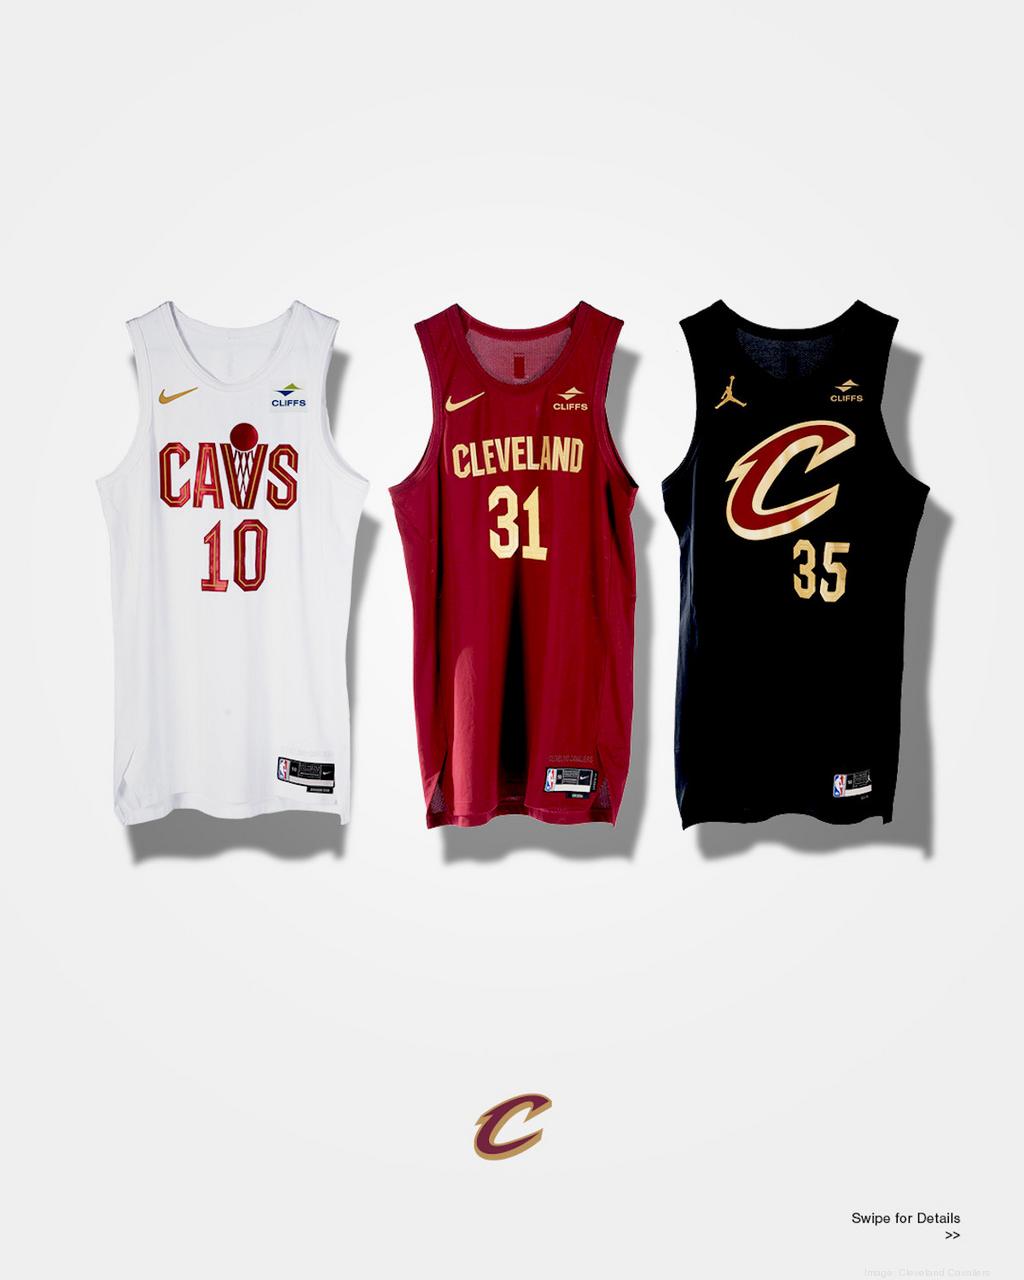 Cleveland Cavaliers unveil new uniforms for 2022-2023 season